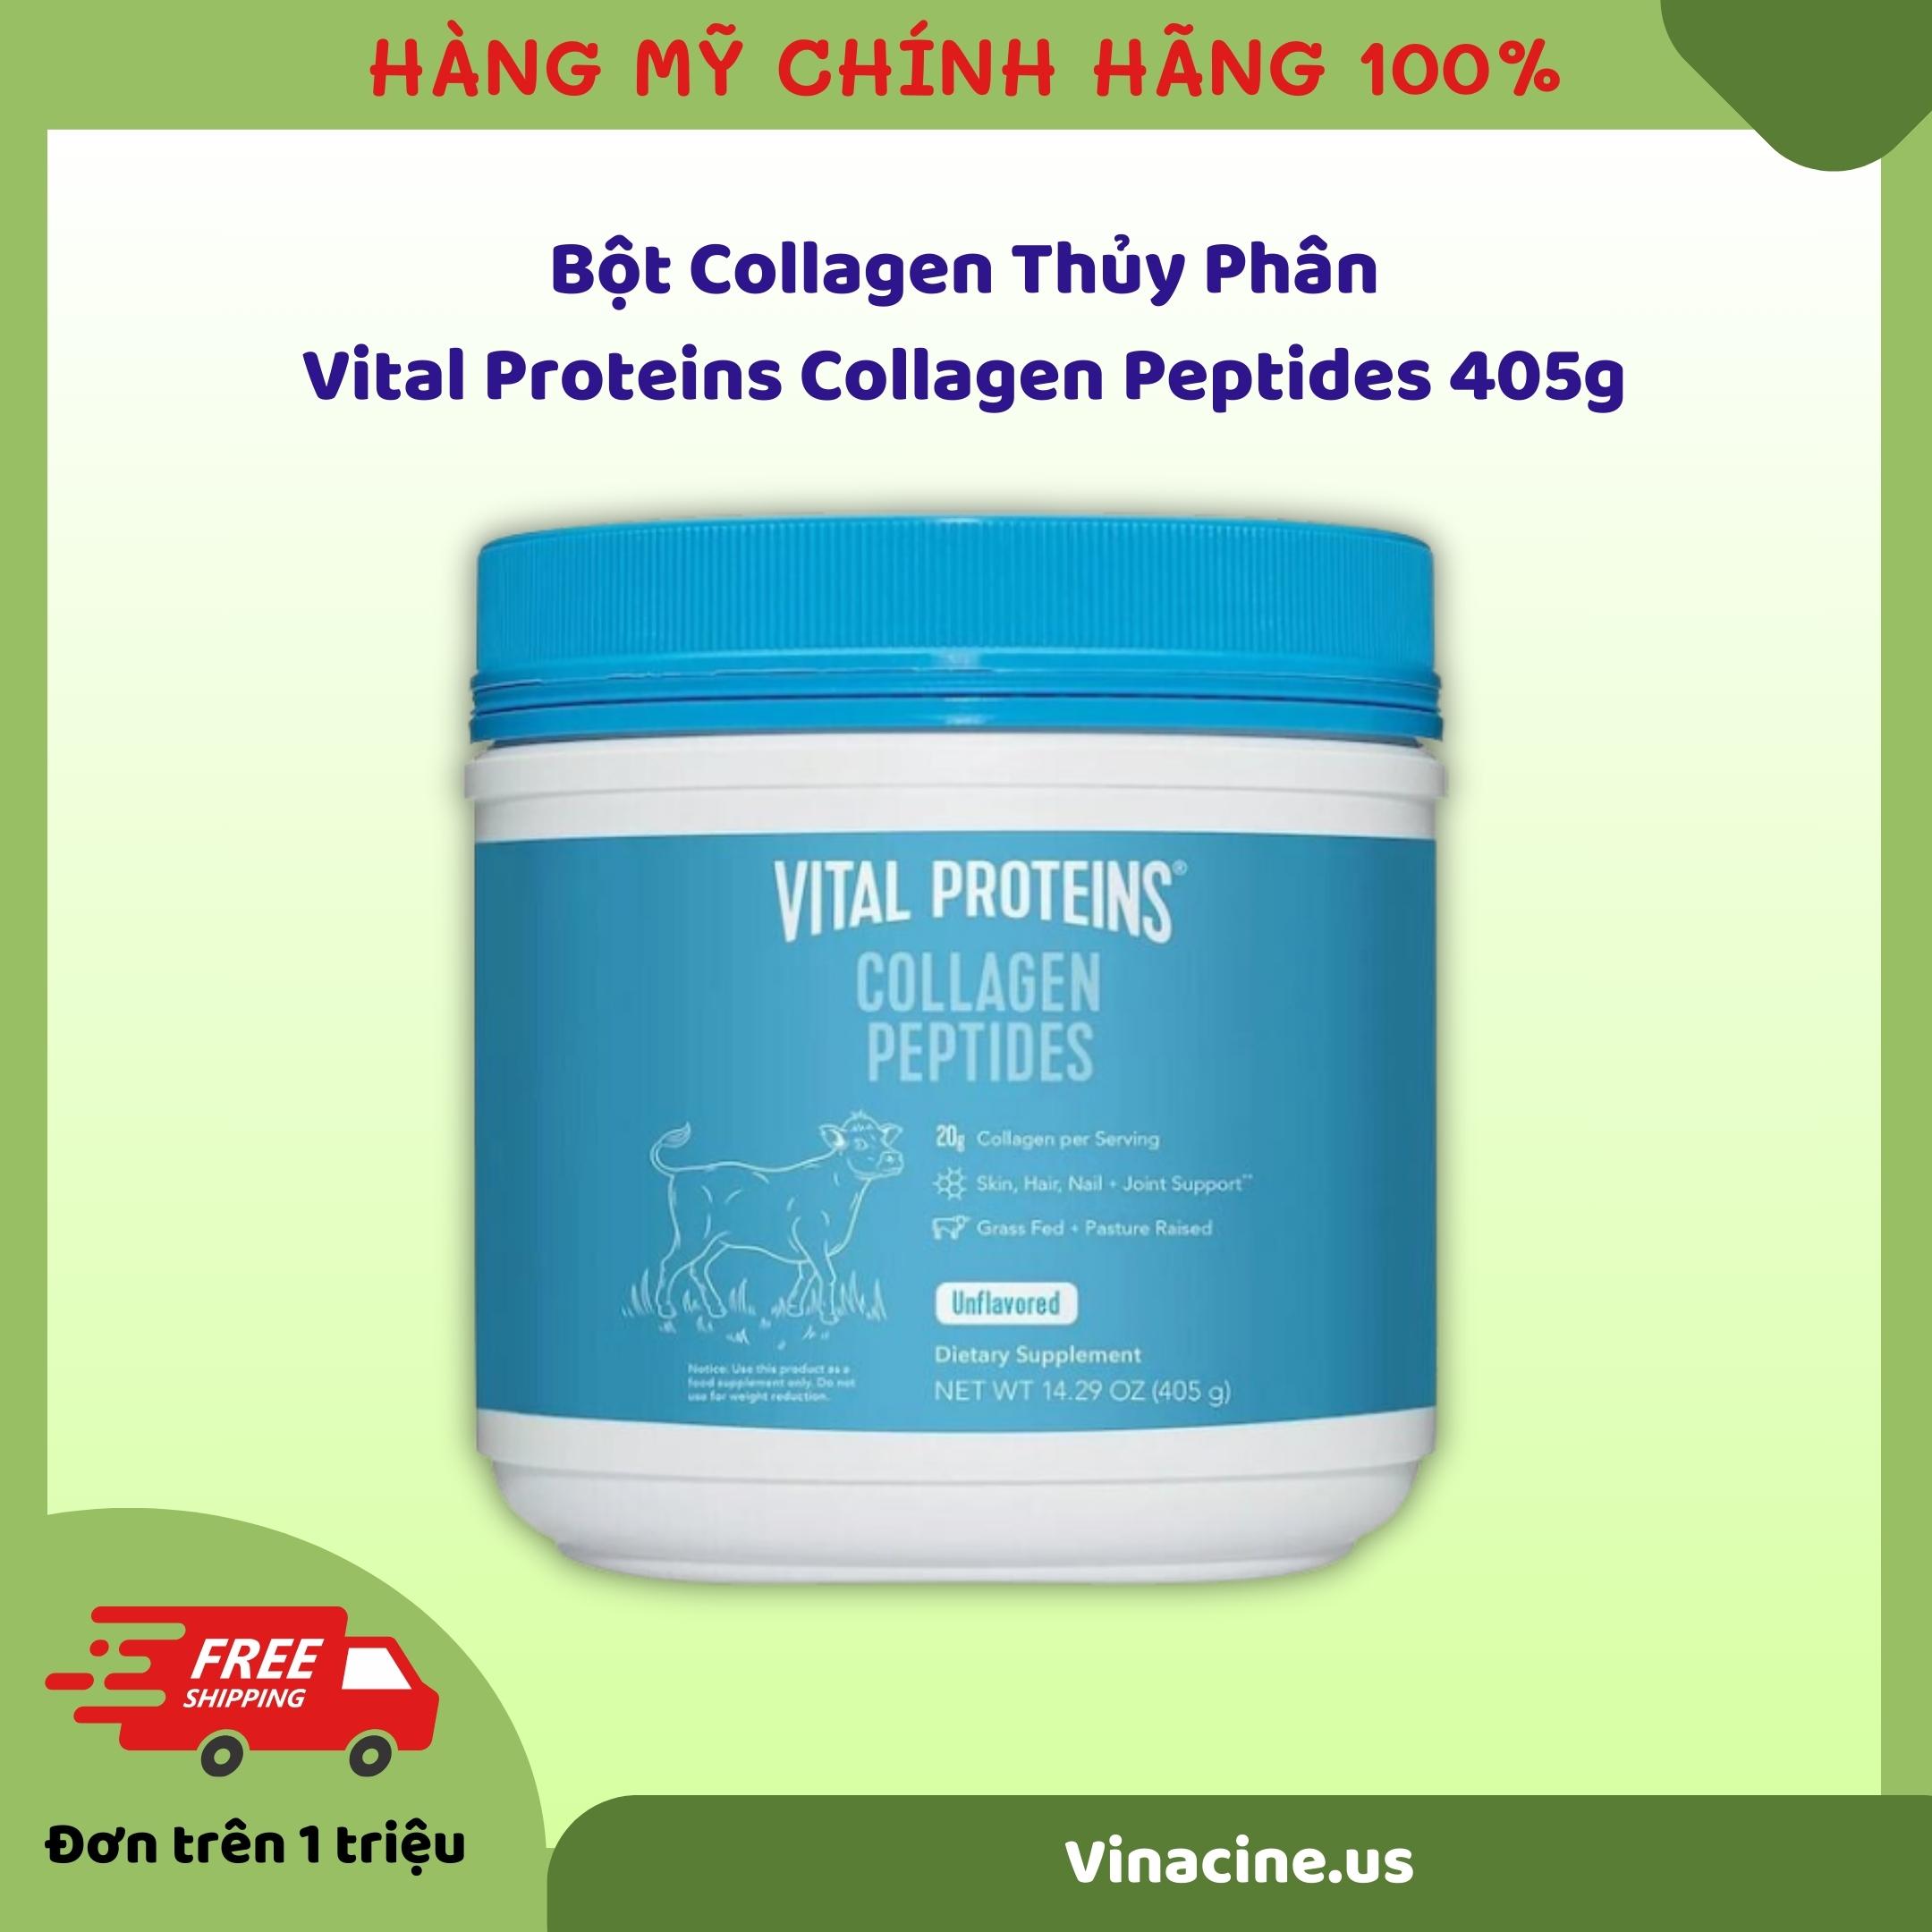 Bột Collagen Thủy Phân Vital Proteins Collagen Peptides 405g